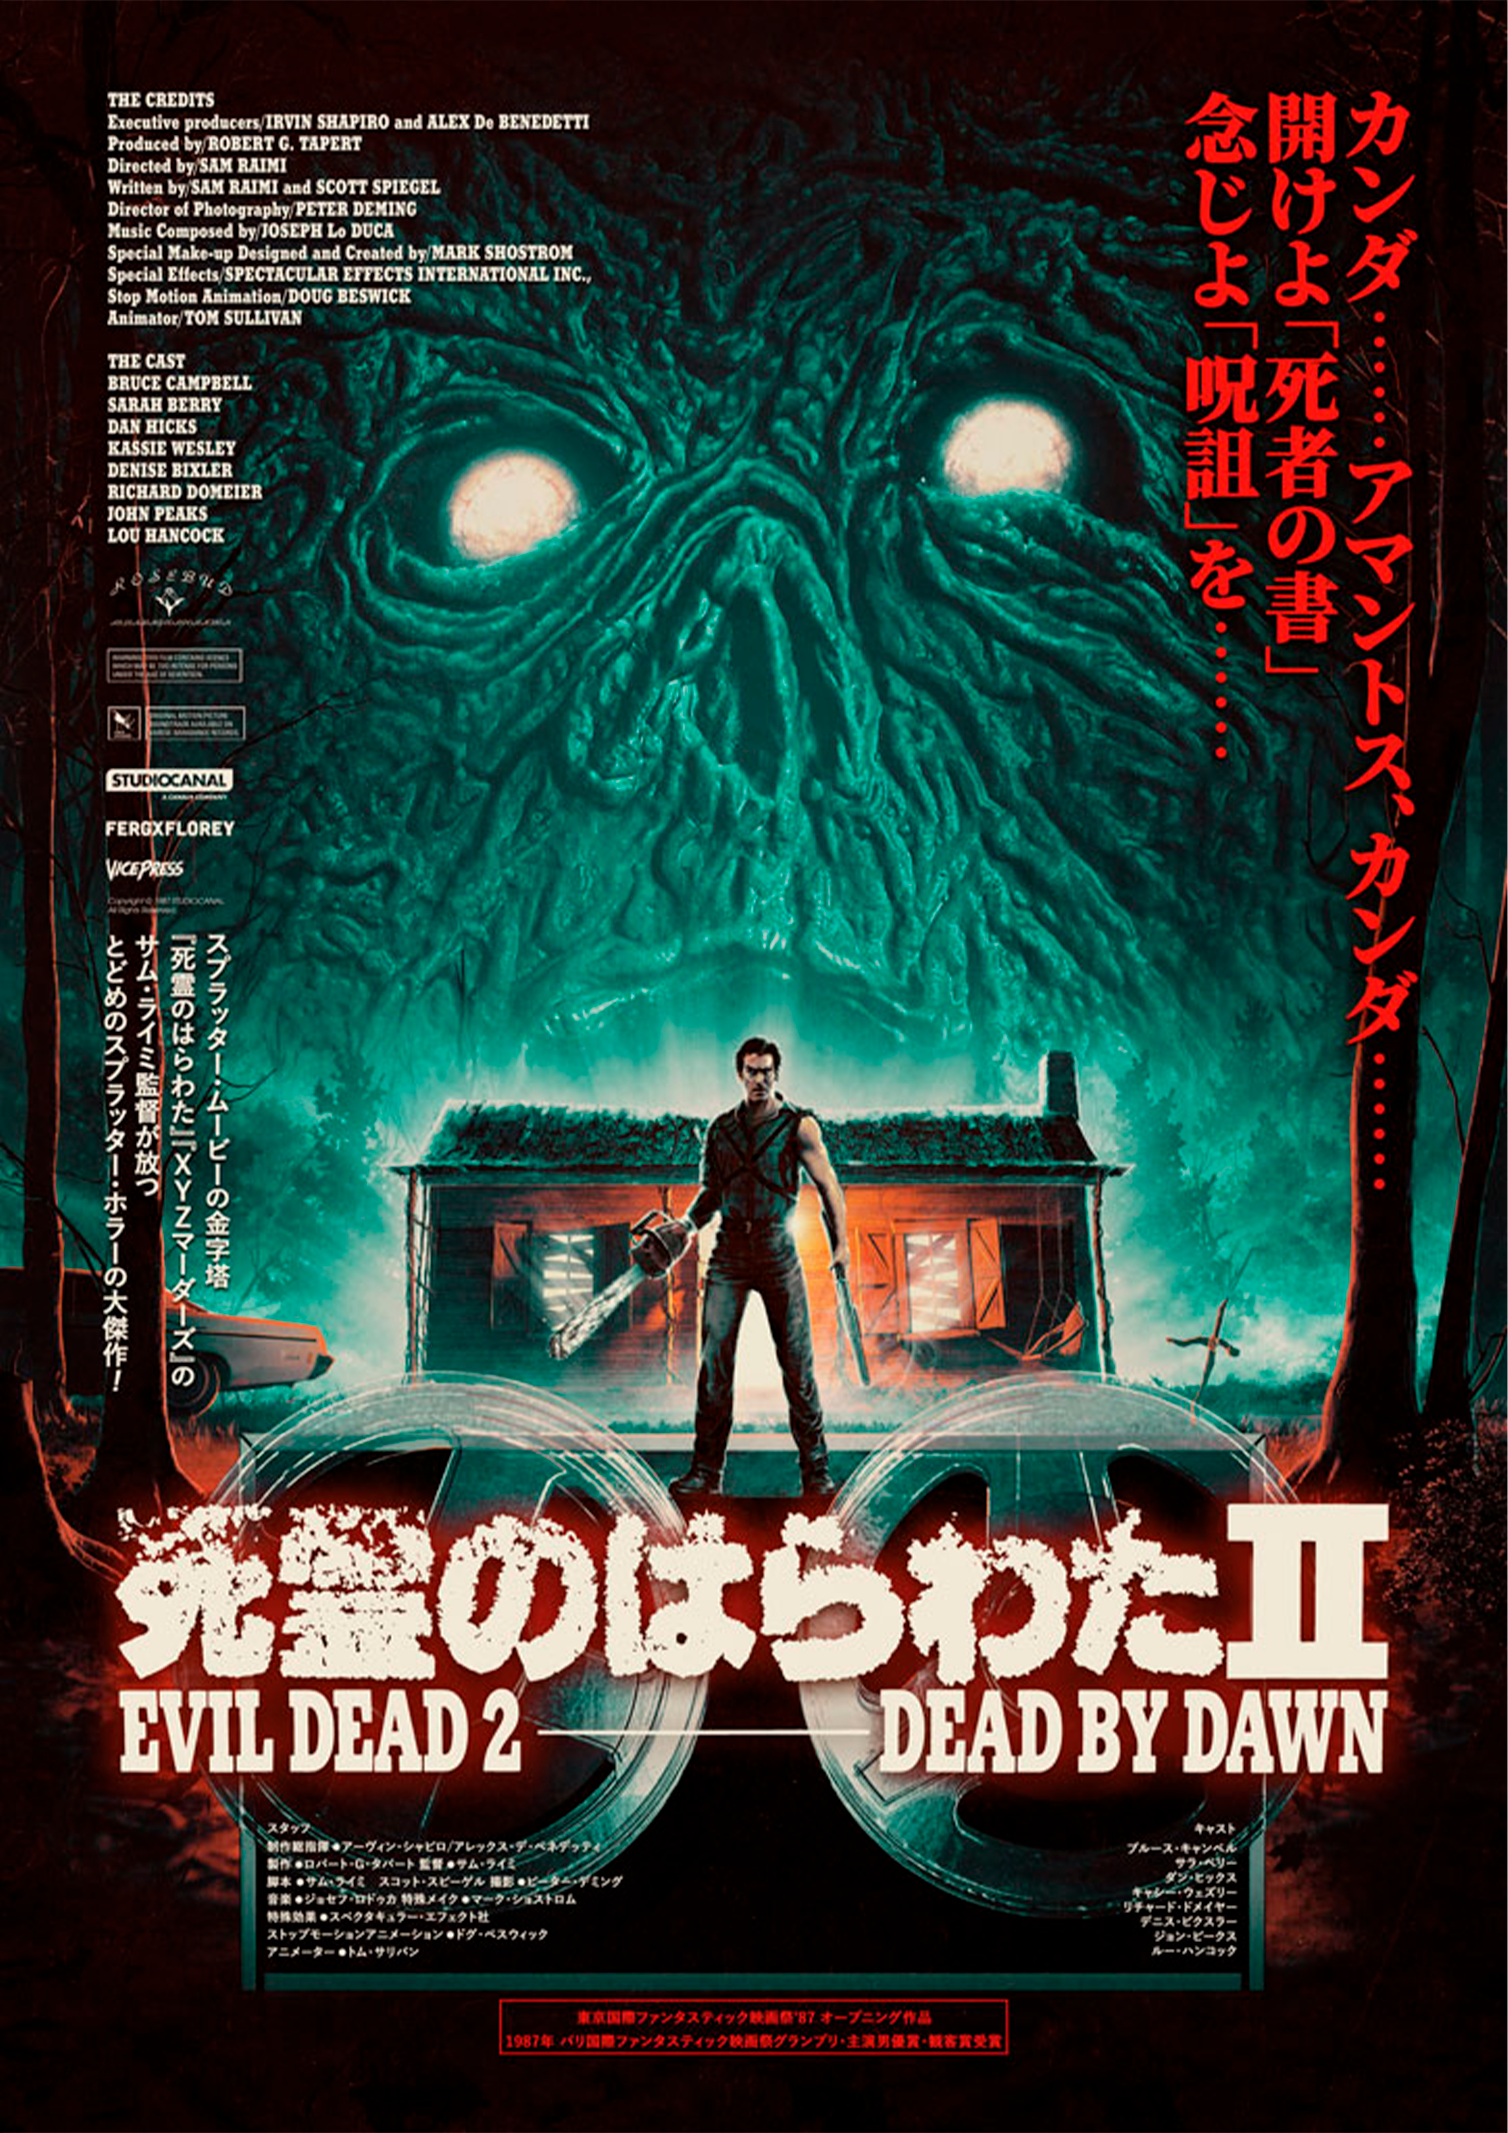 Haunted Evil Dead - Movie